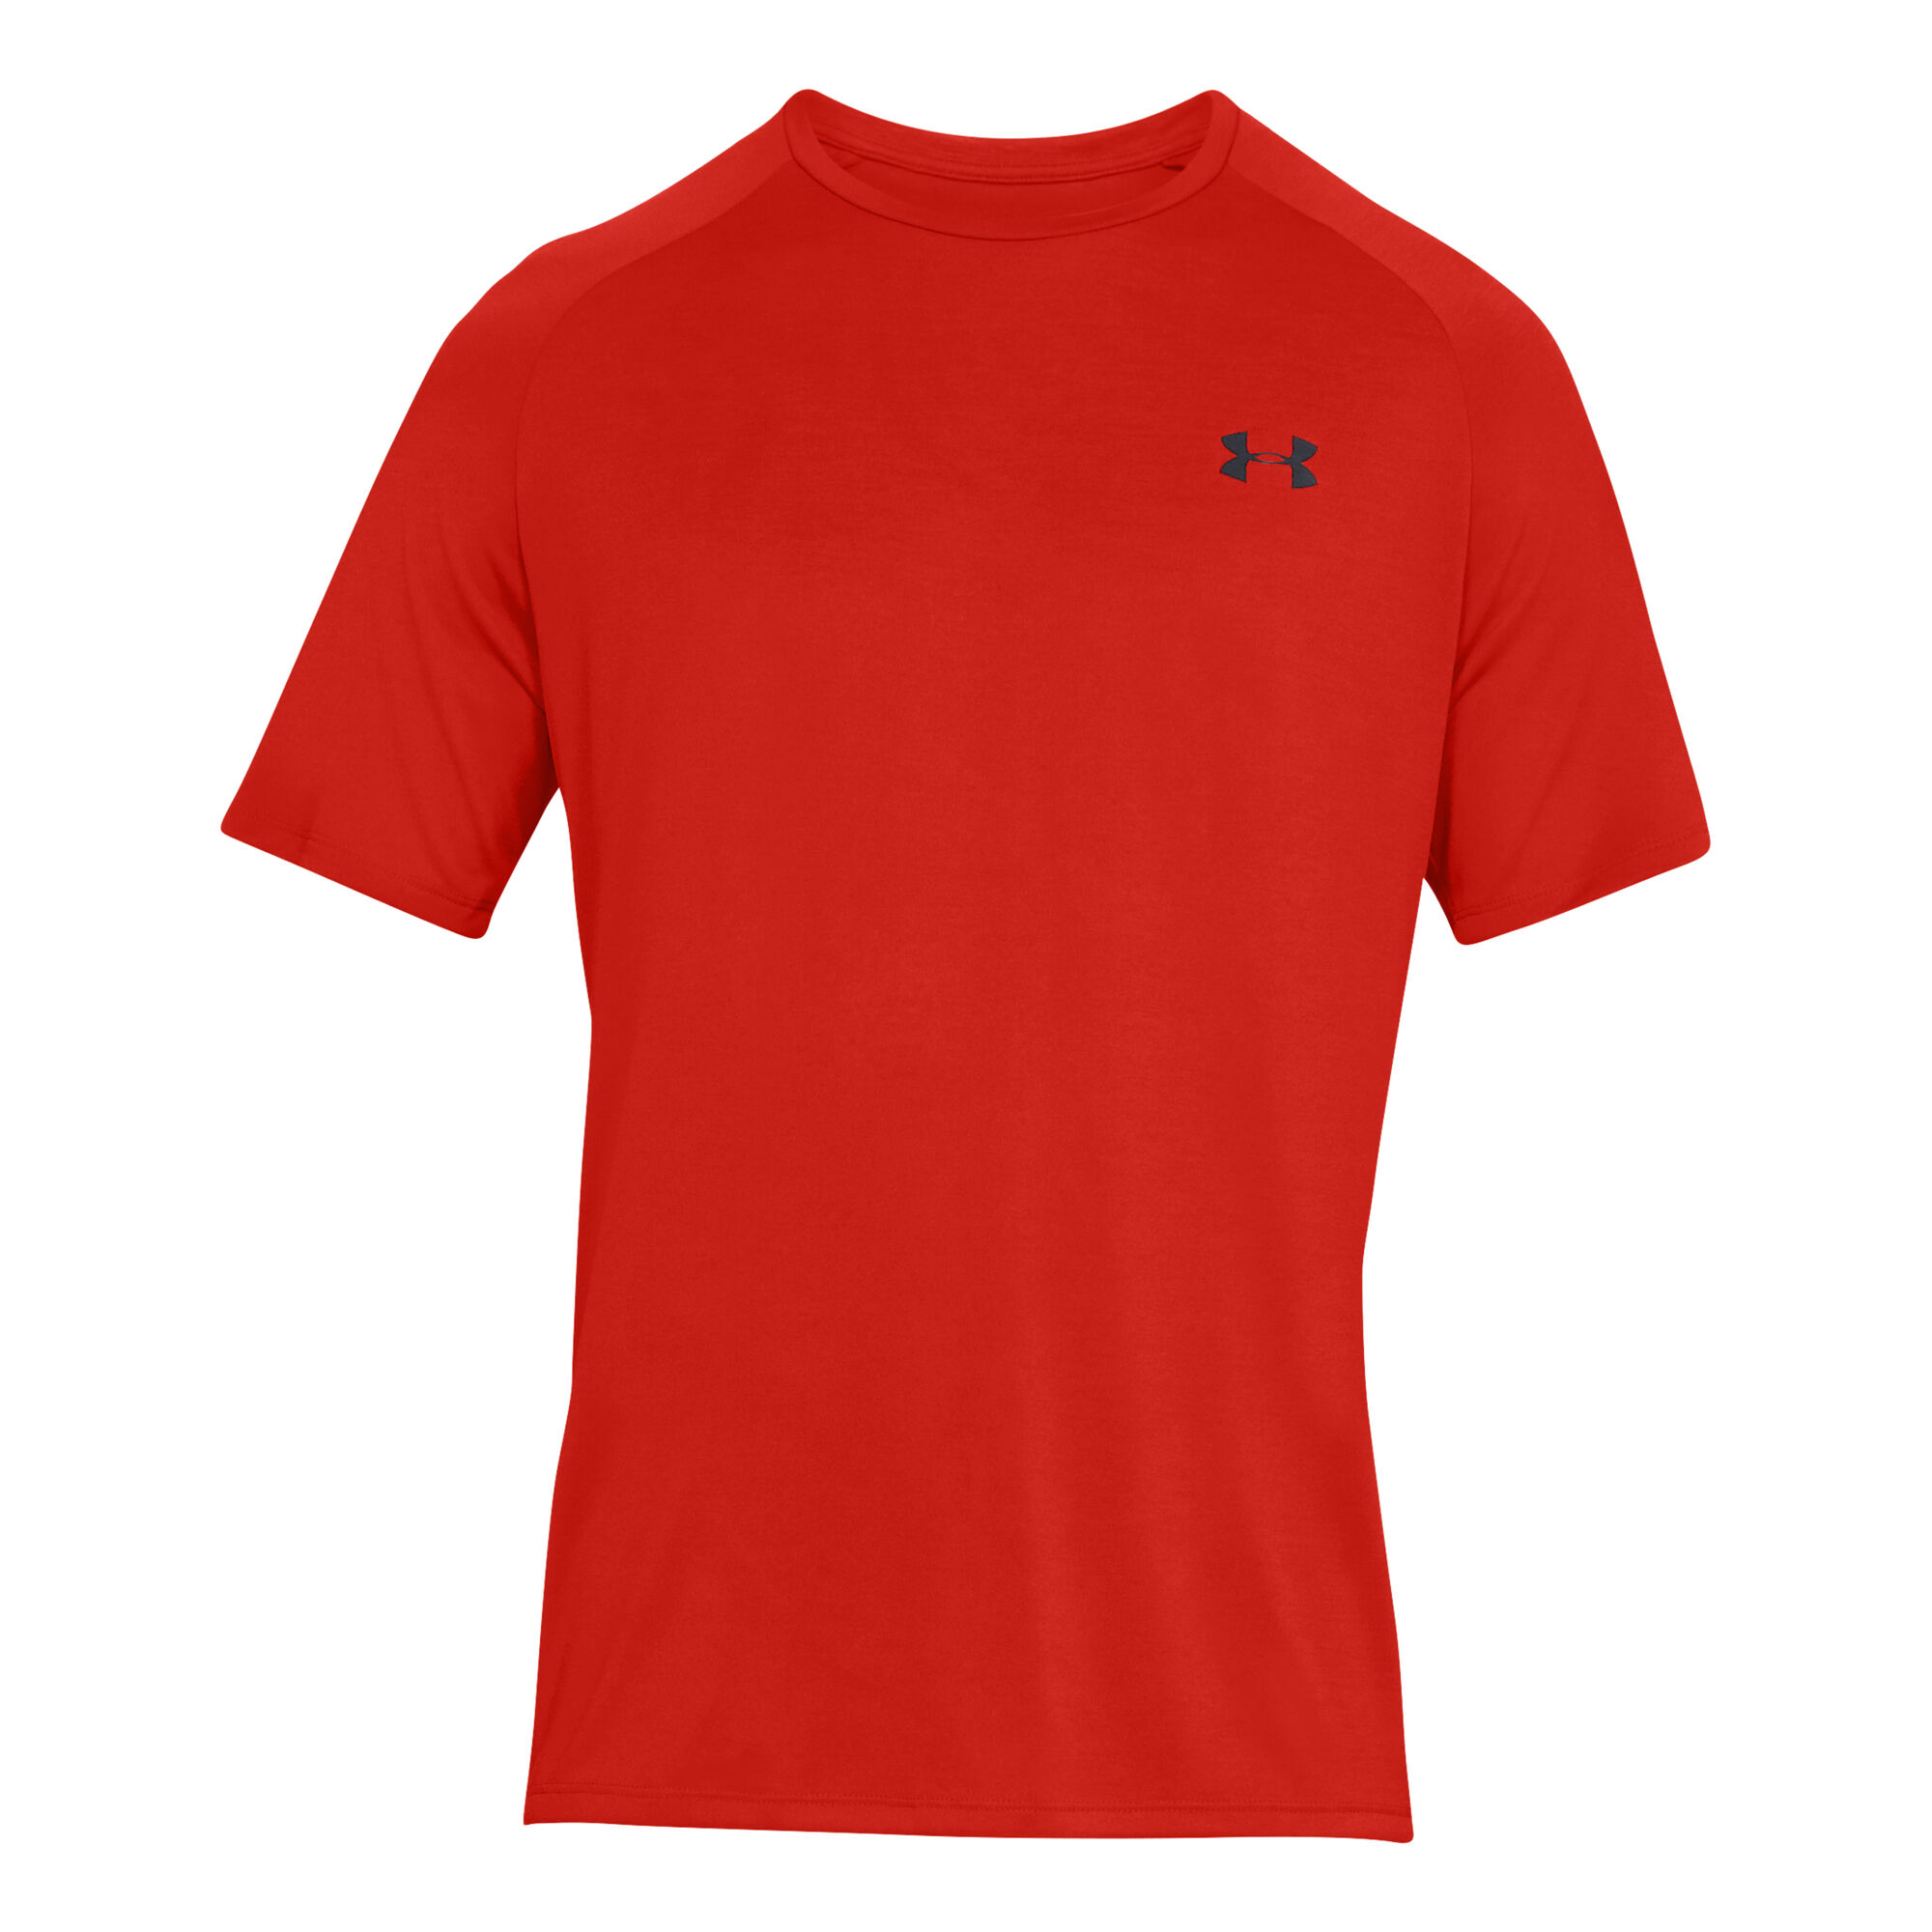 buy Under Armour Tech 2.0 T-Shirt Men - Red, Black online | Tennis-Point